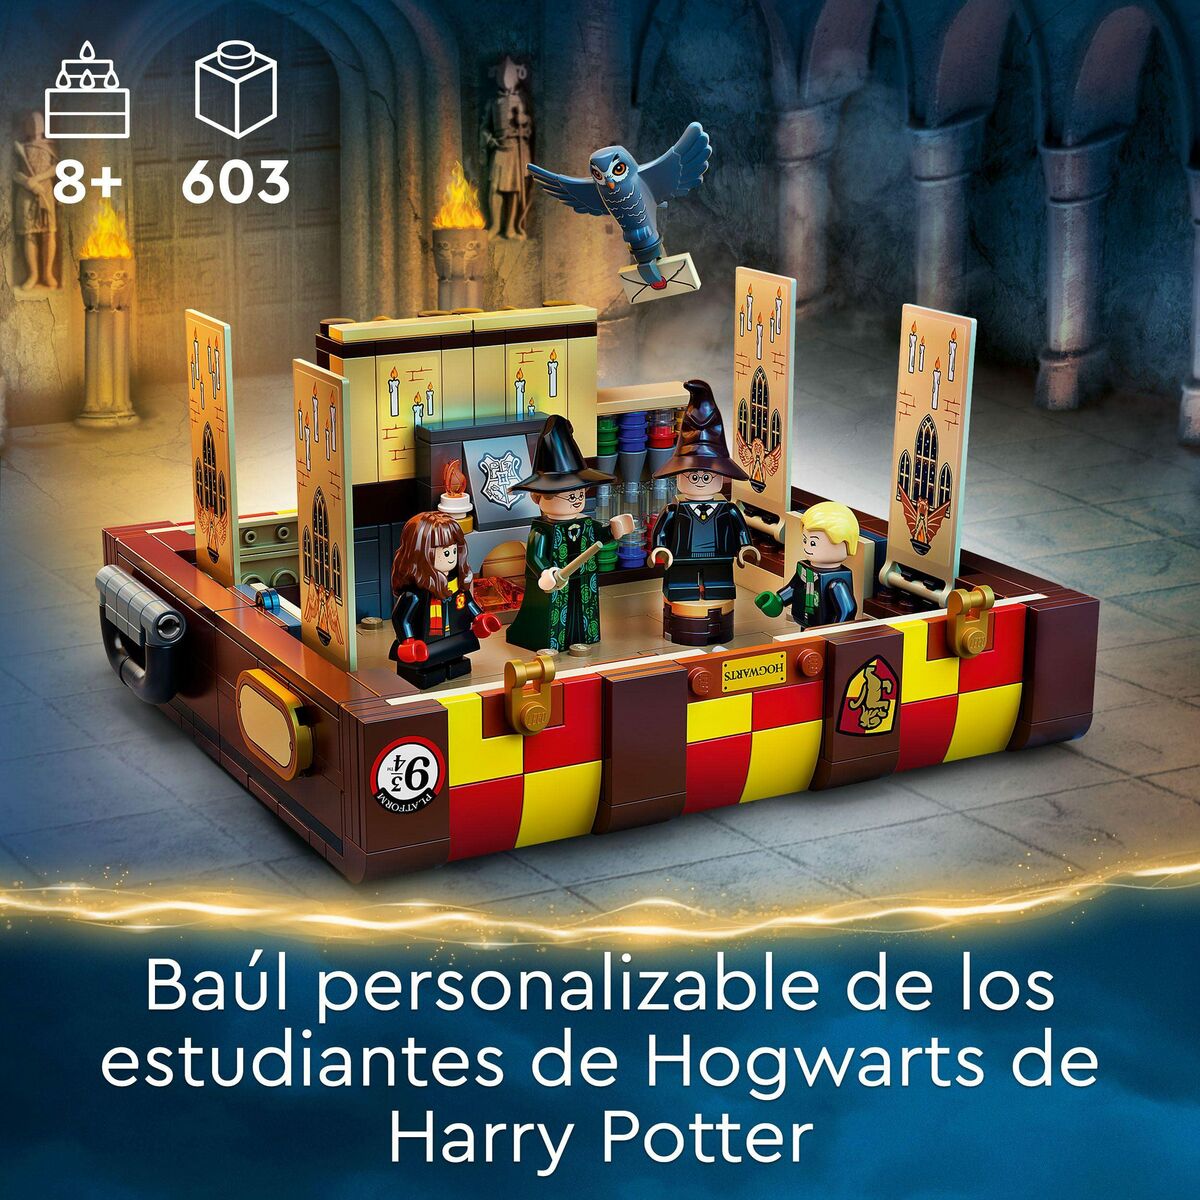 Lego 76399 Harry Potter The Magic Trunk